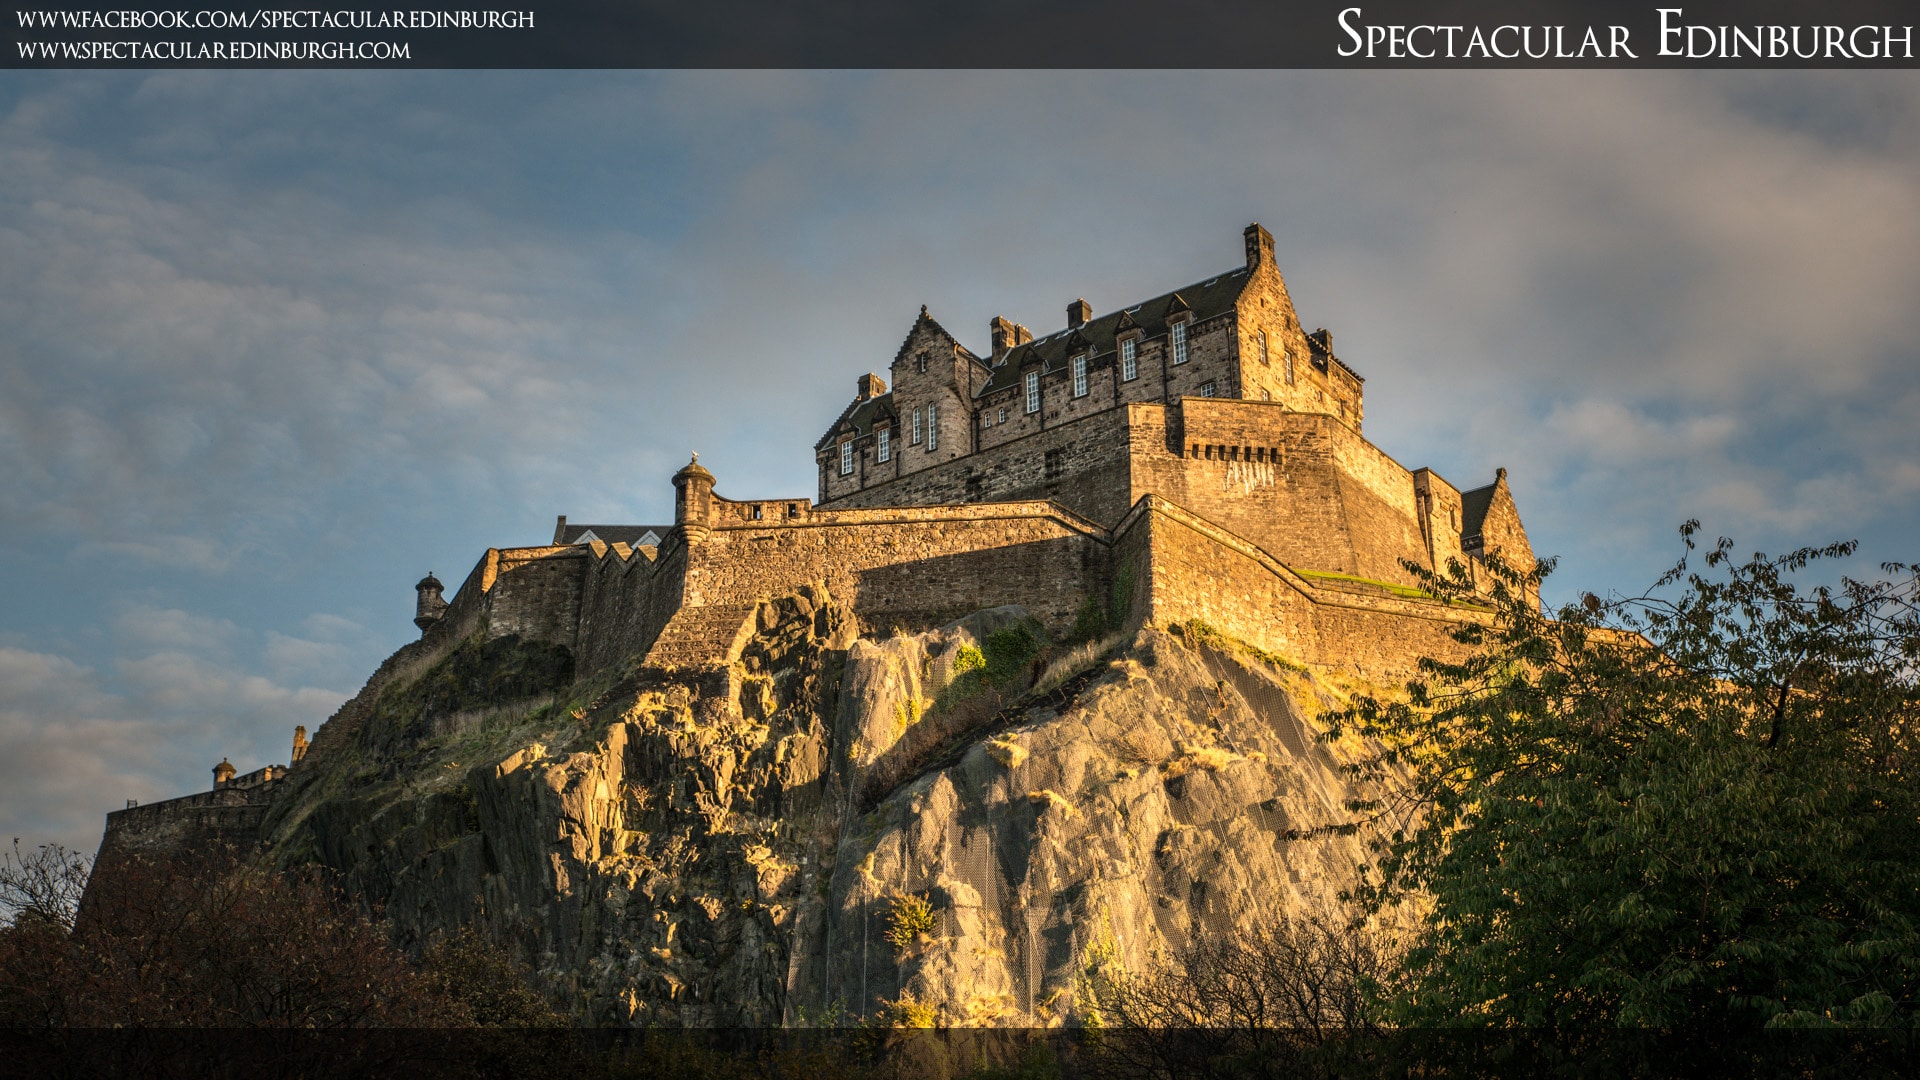 Wallpaper 1 - Evening Sun on Edinburgh Castle - Spectacular Edinburgh Photography